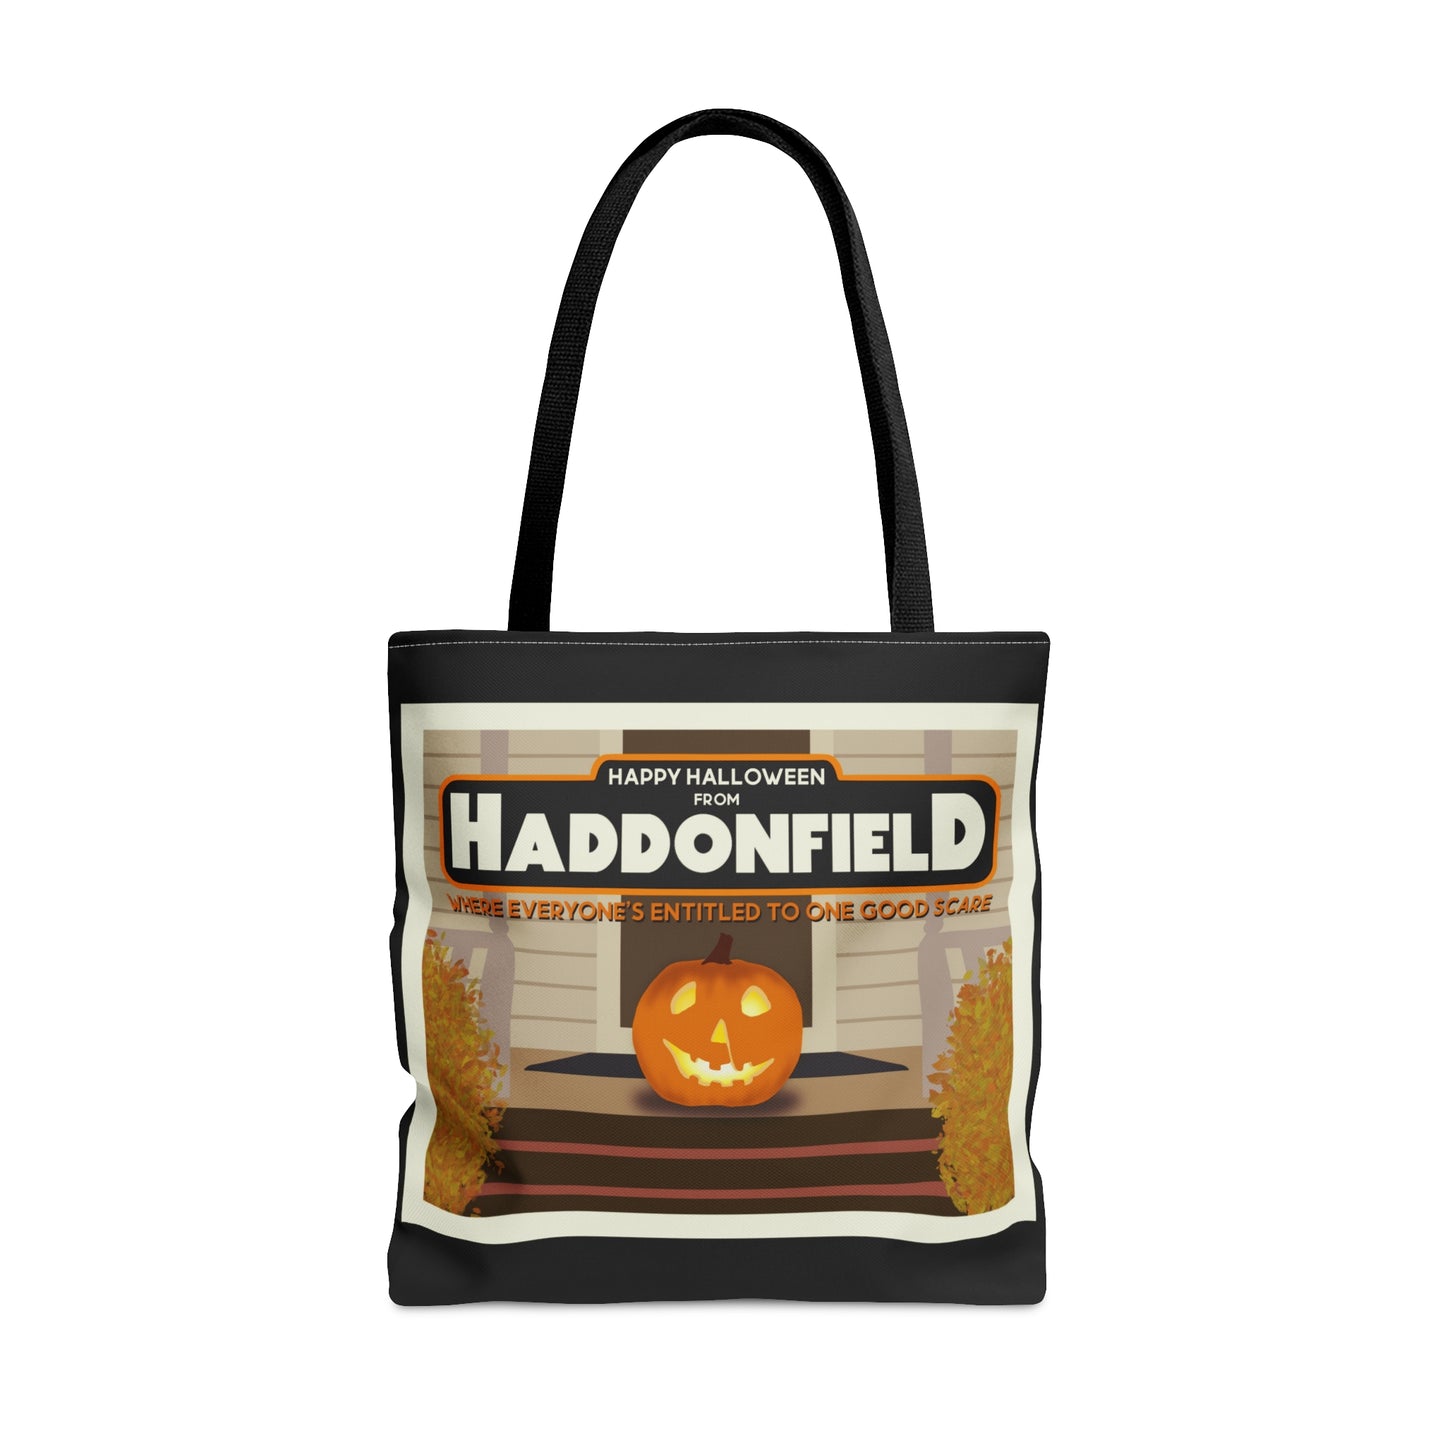 Haddonfield Halloween Tote Bag (Black)